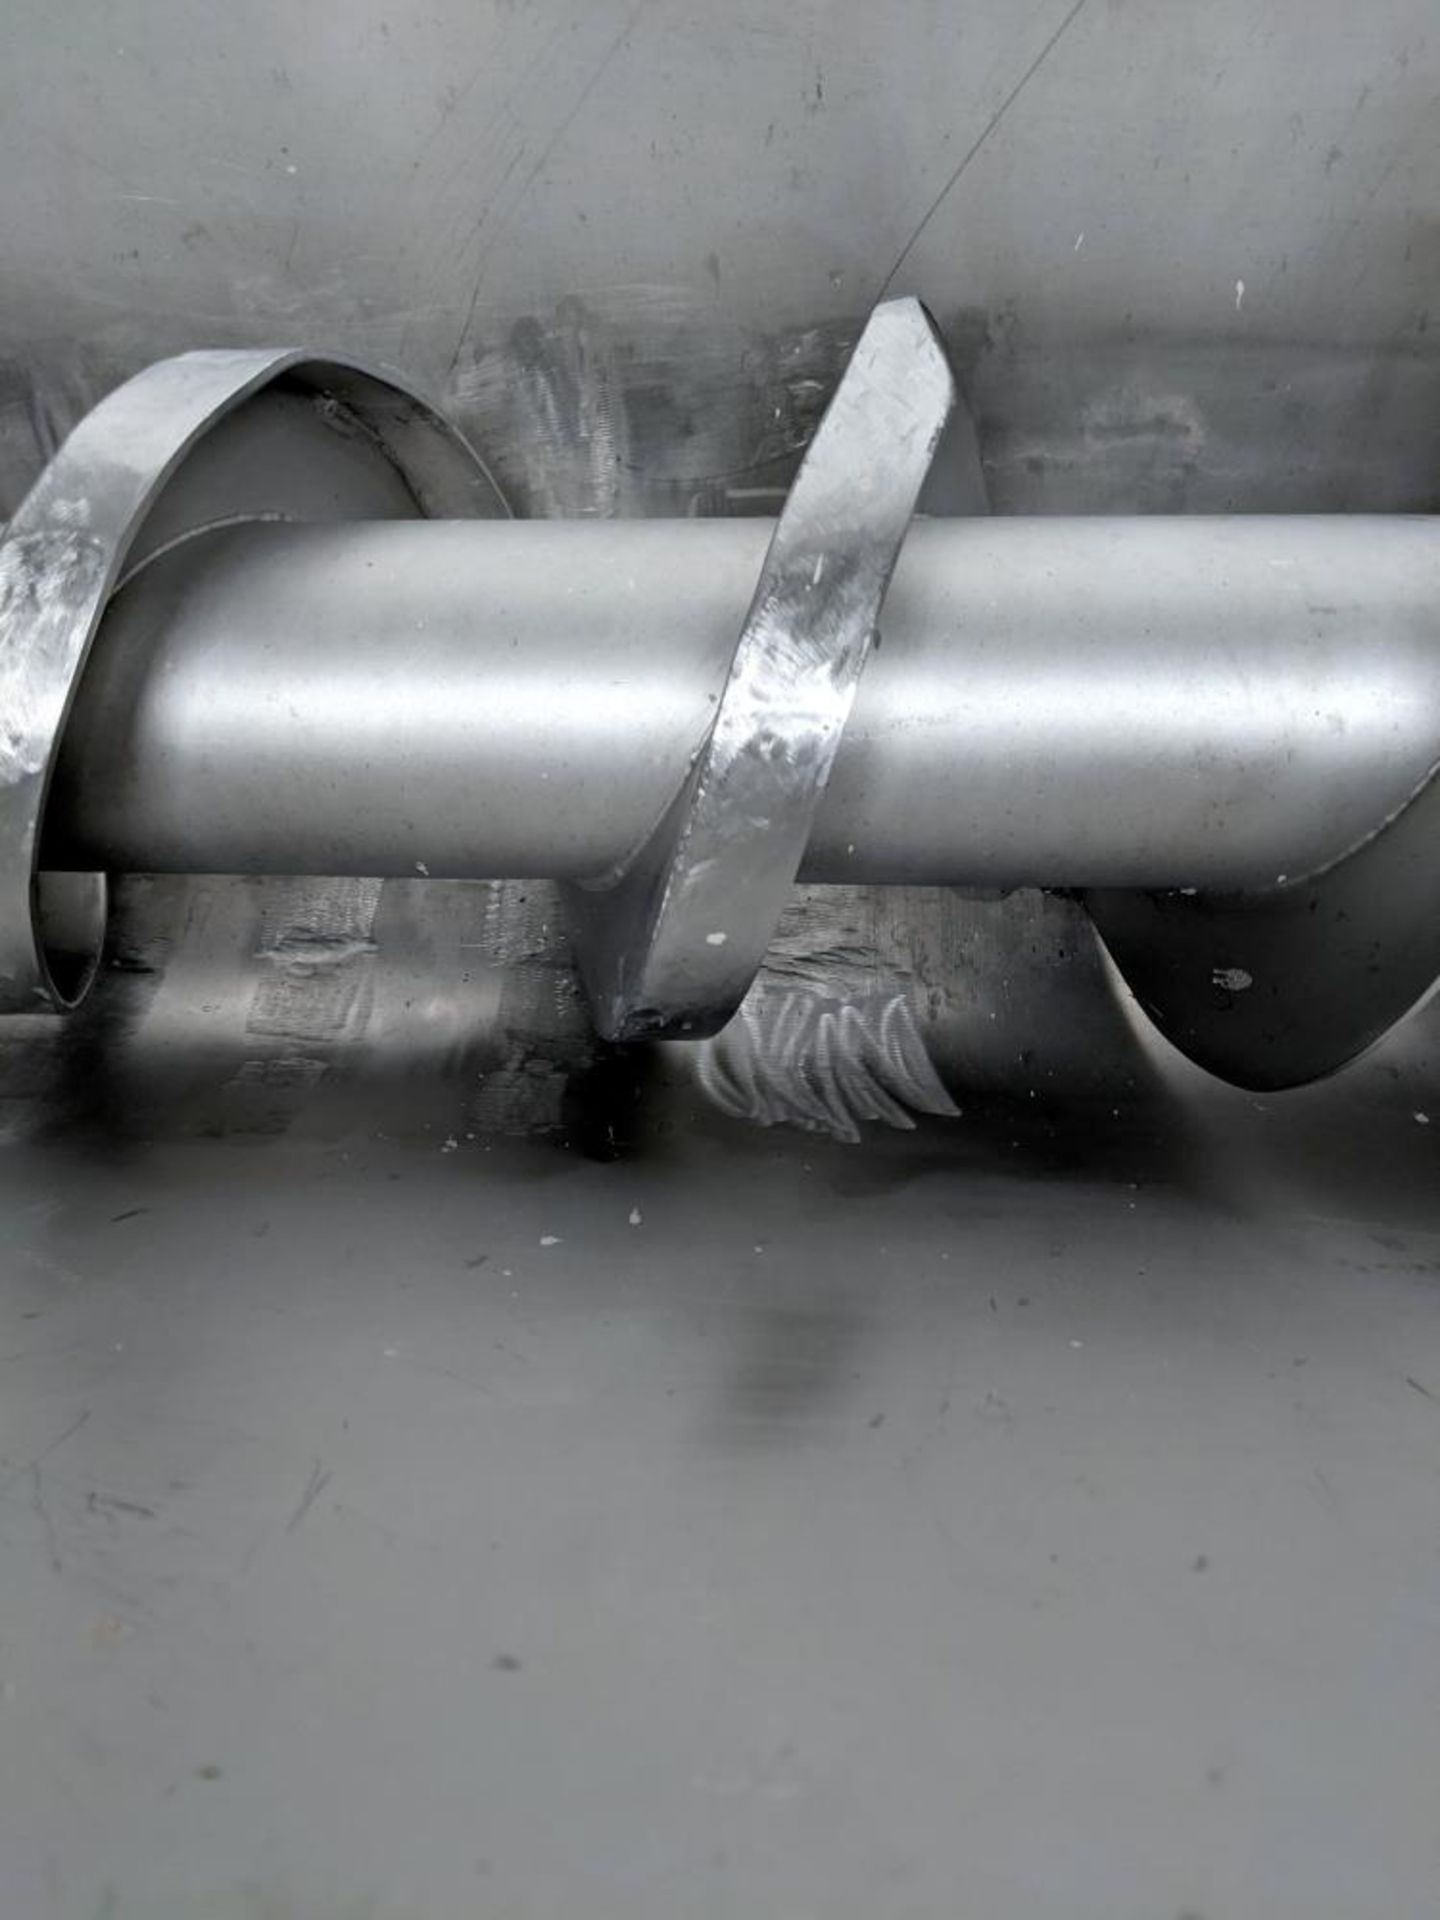 Wolfking Sanitary Screw Conveyor, Stainless Steel, Horizontal. Approx 9" diameter x 168" long screw - Image 7 of 15